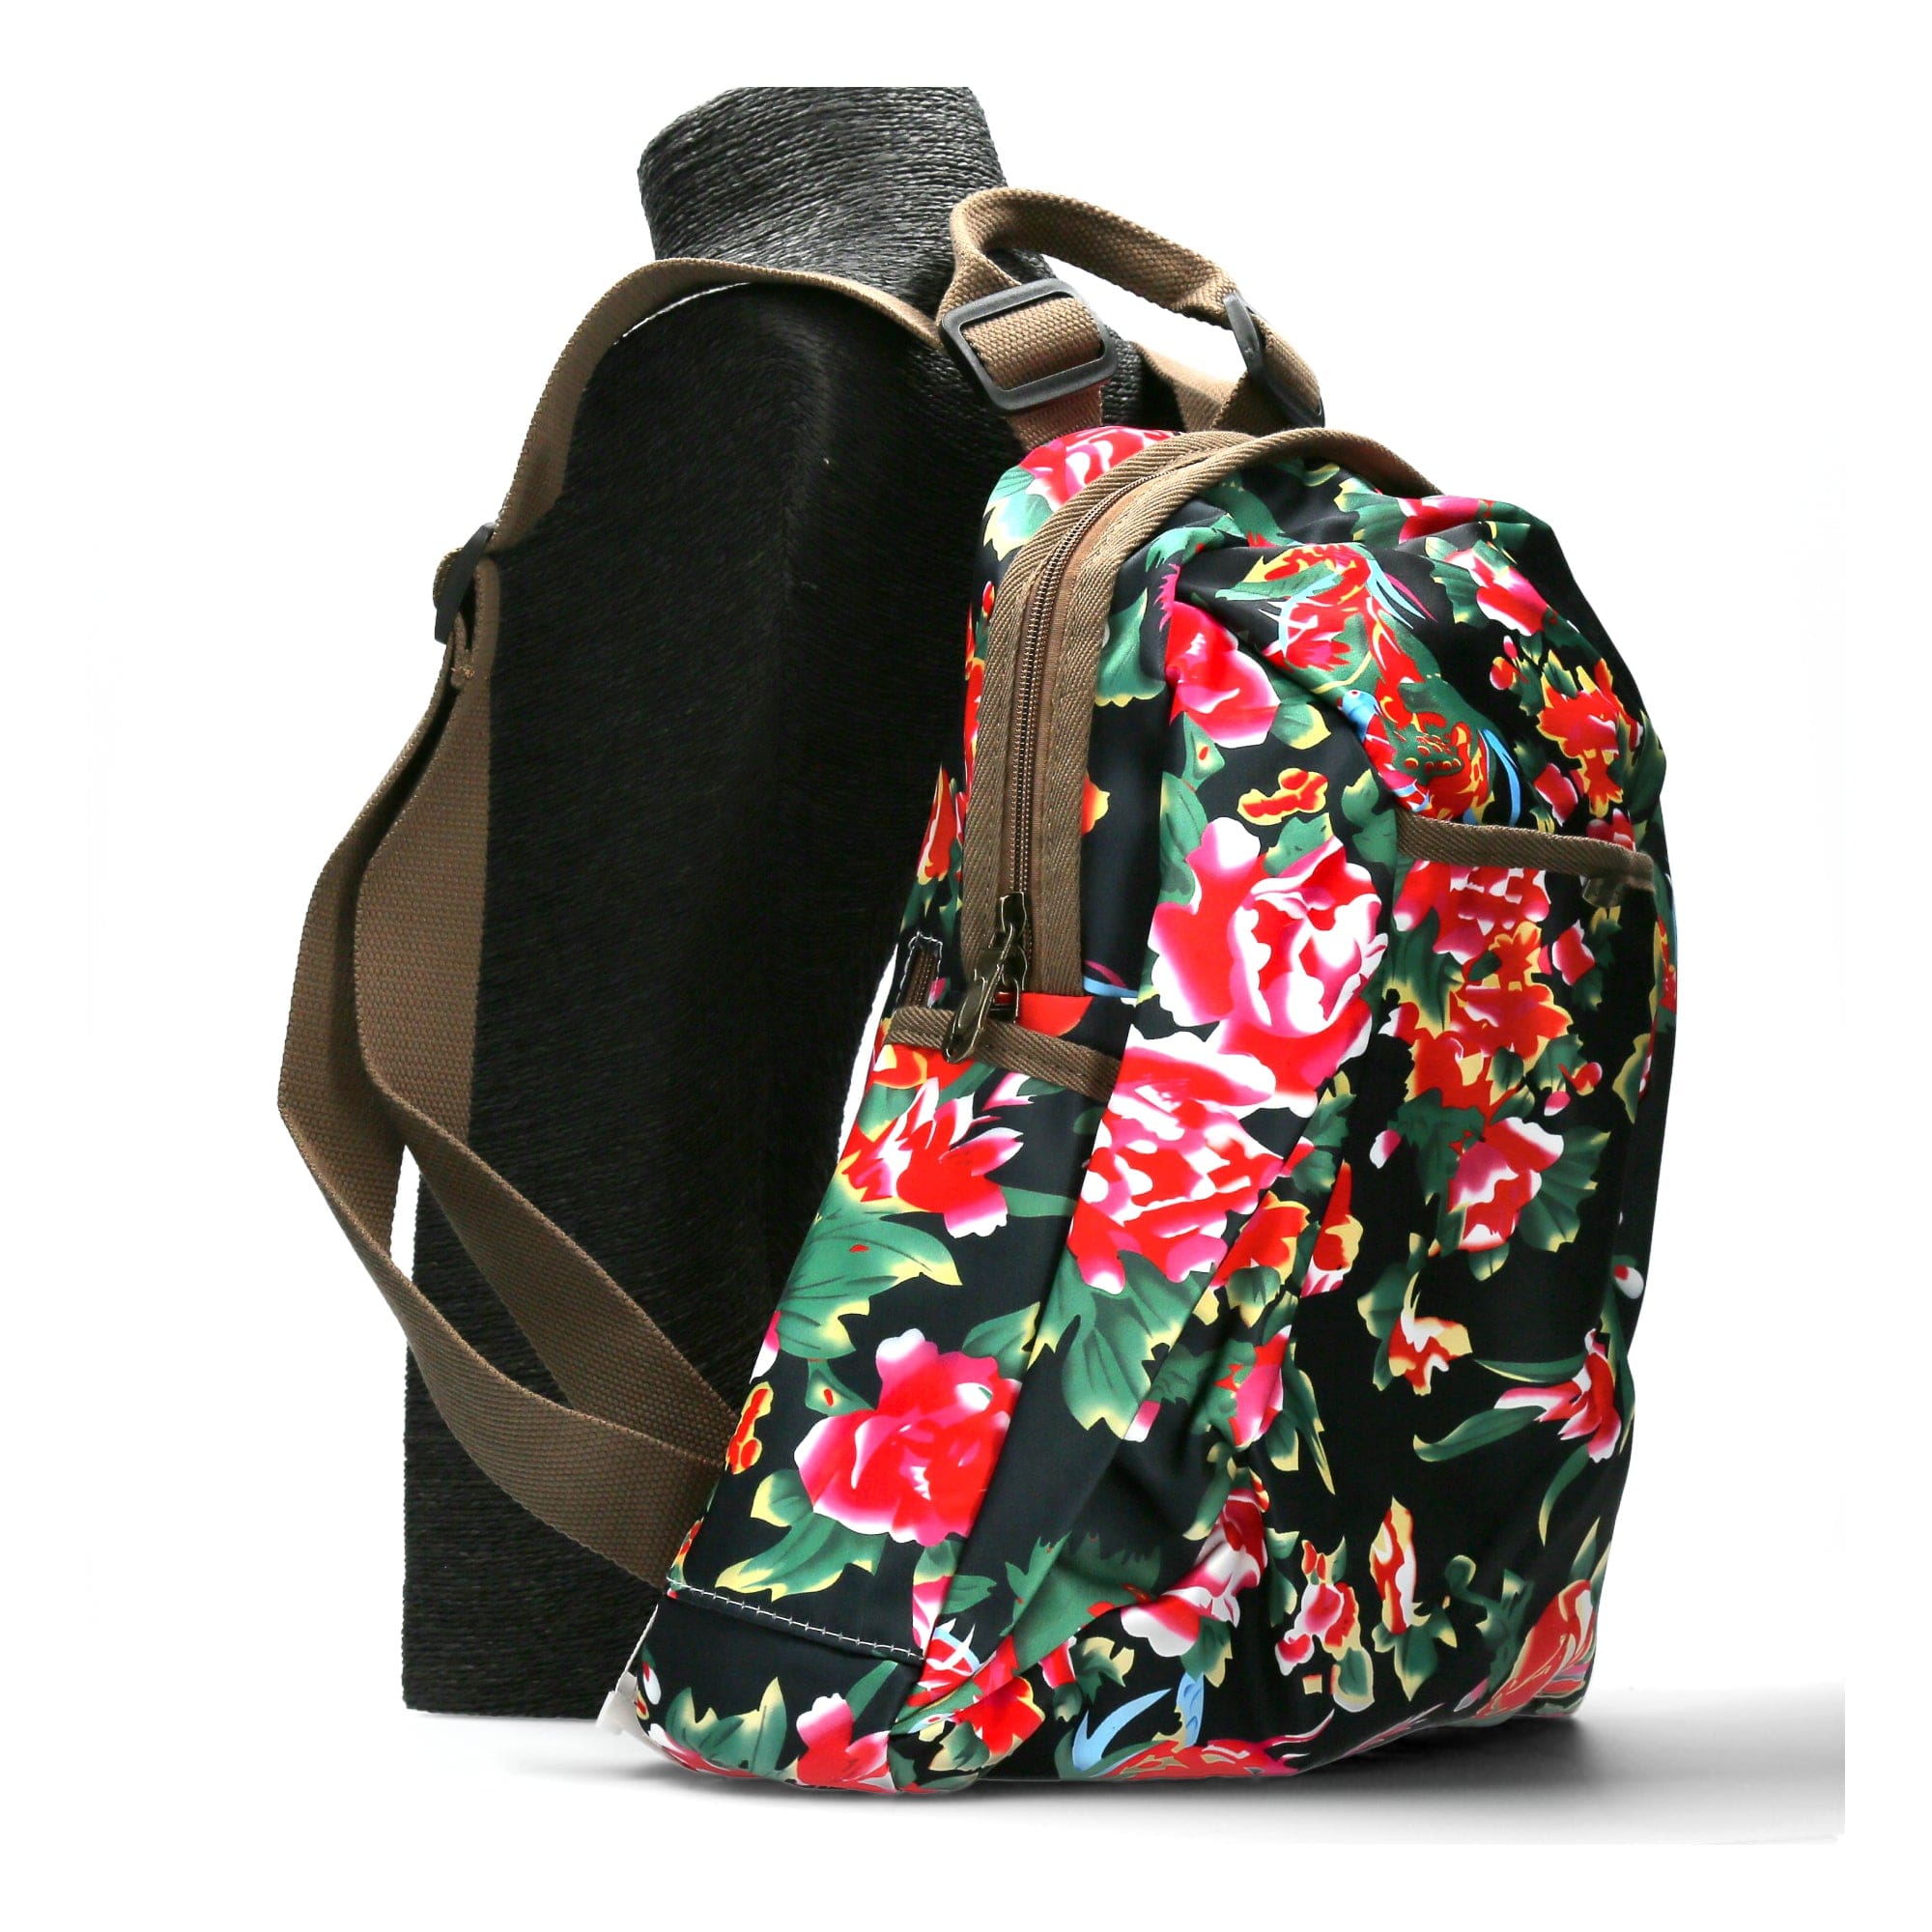 Sac à dos Romy Exclusivité - Backpack